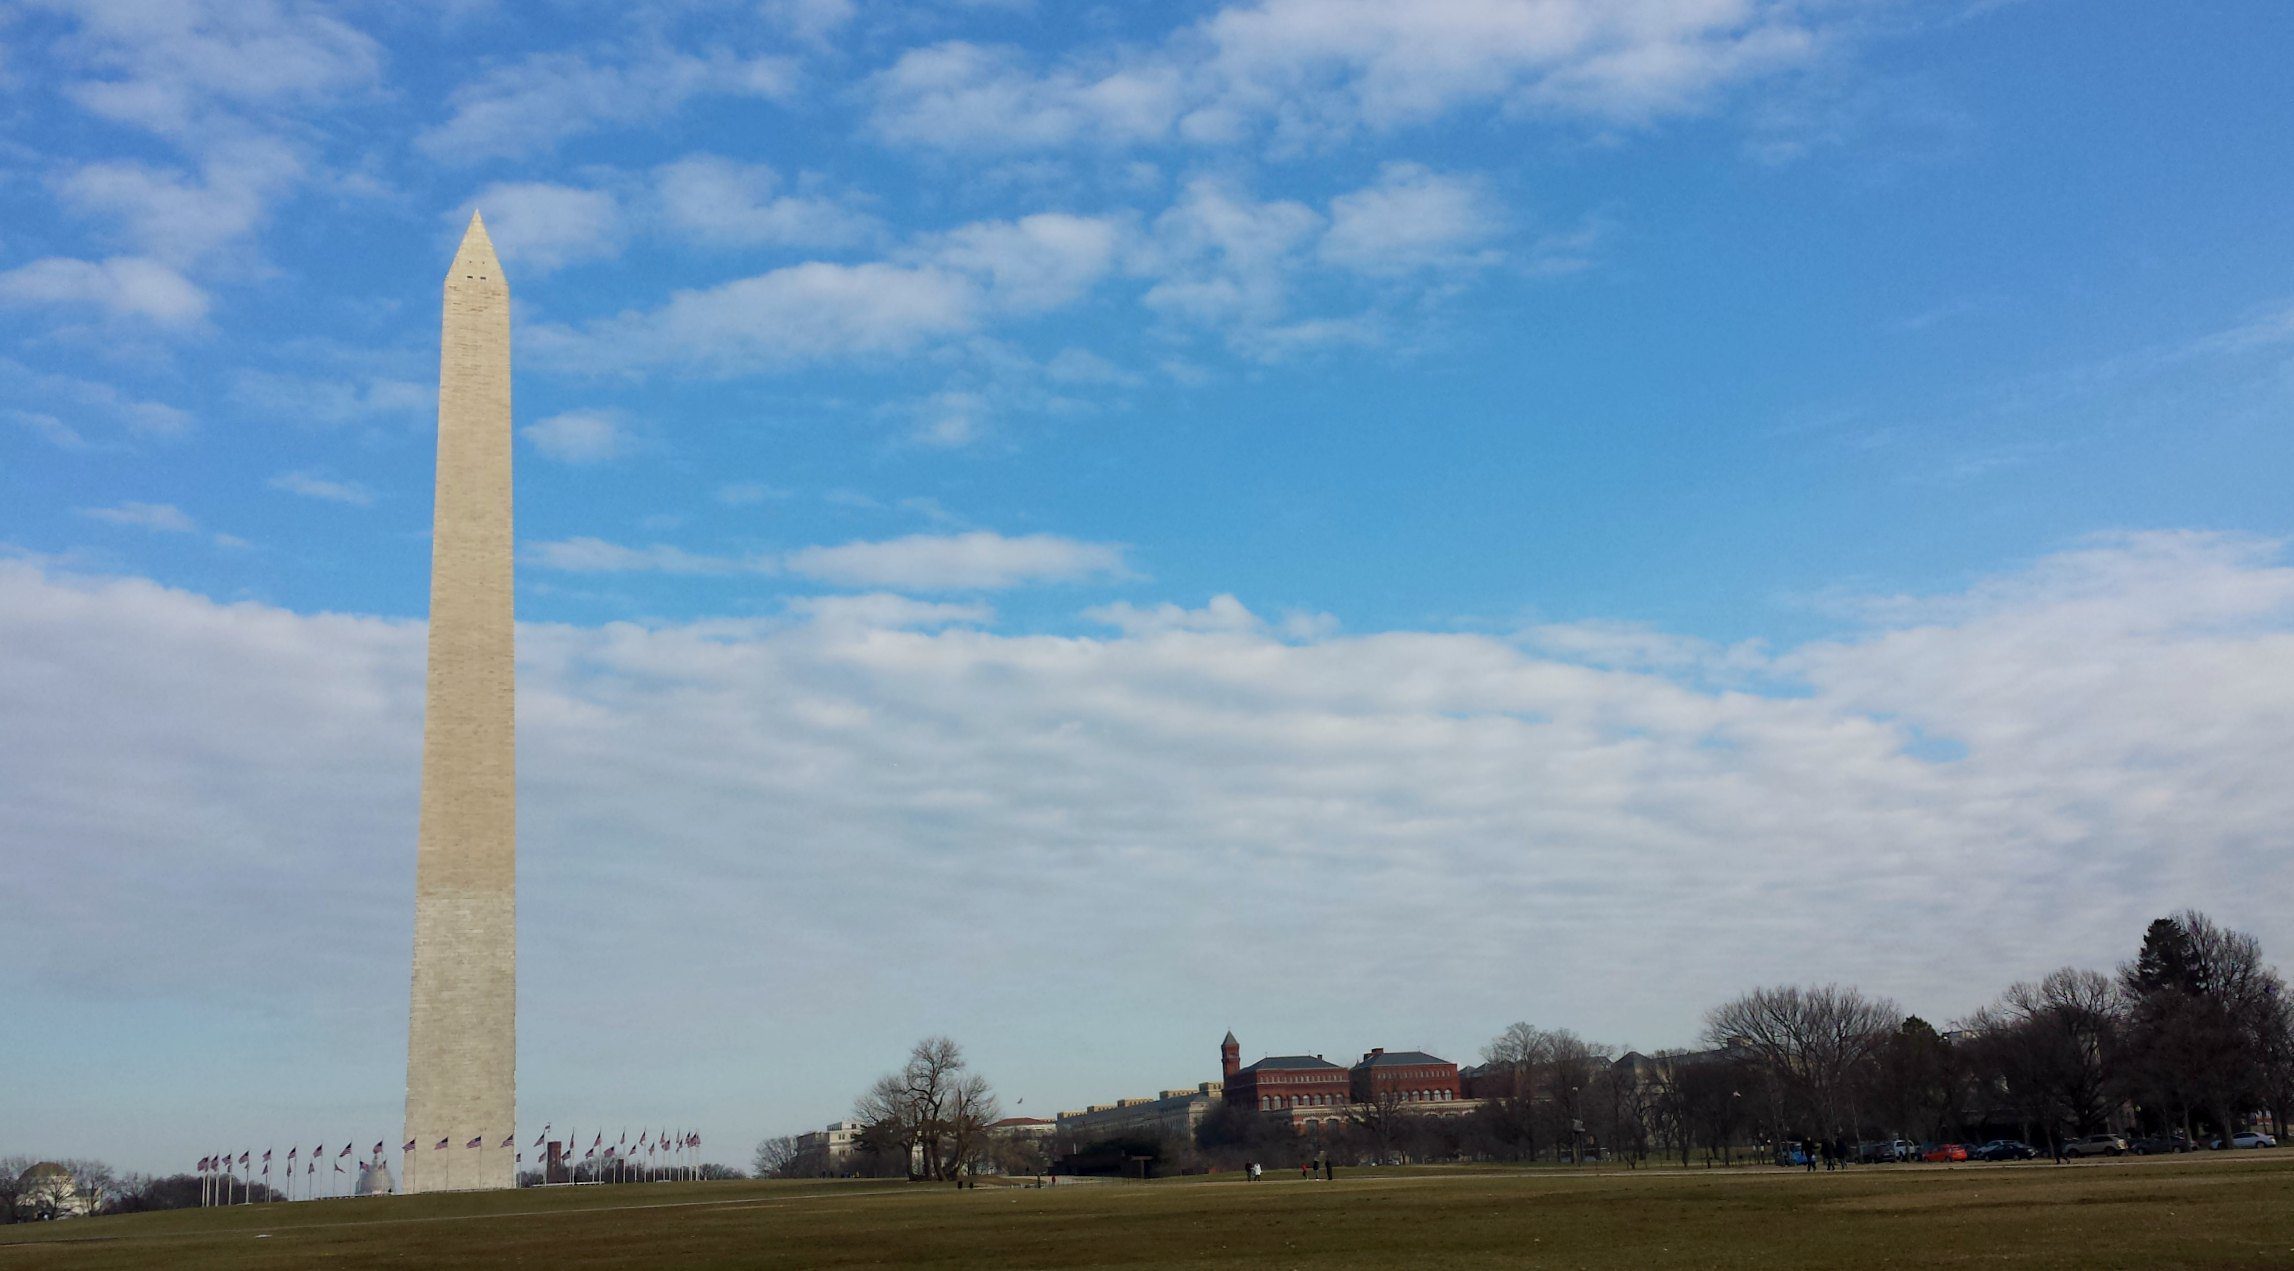 The Washington Monument in the National Mall, Washington DC